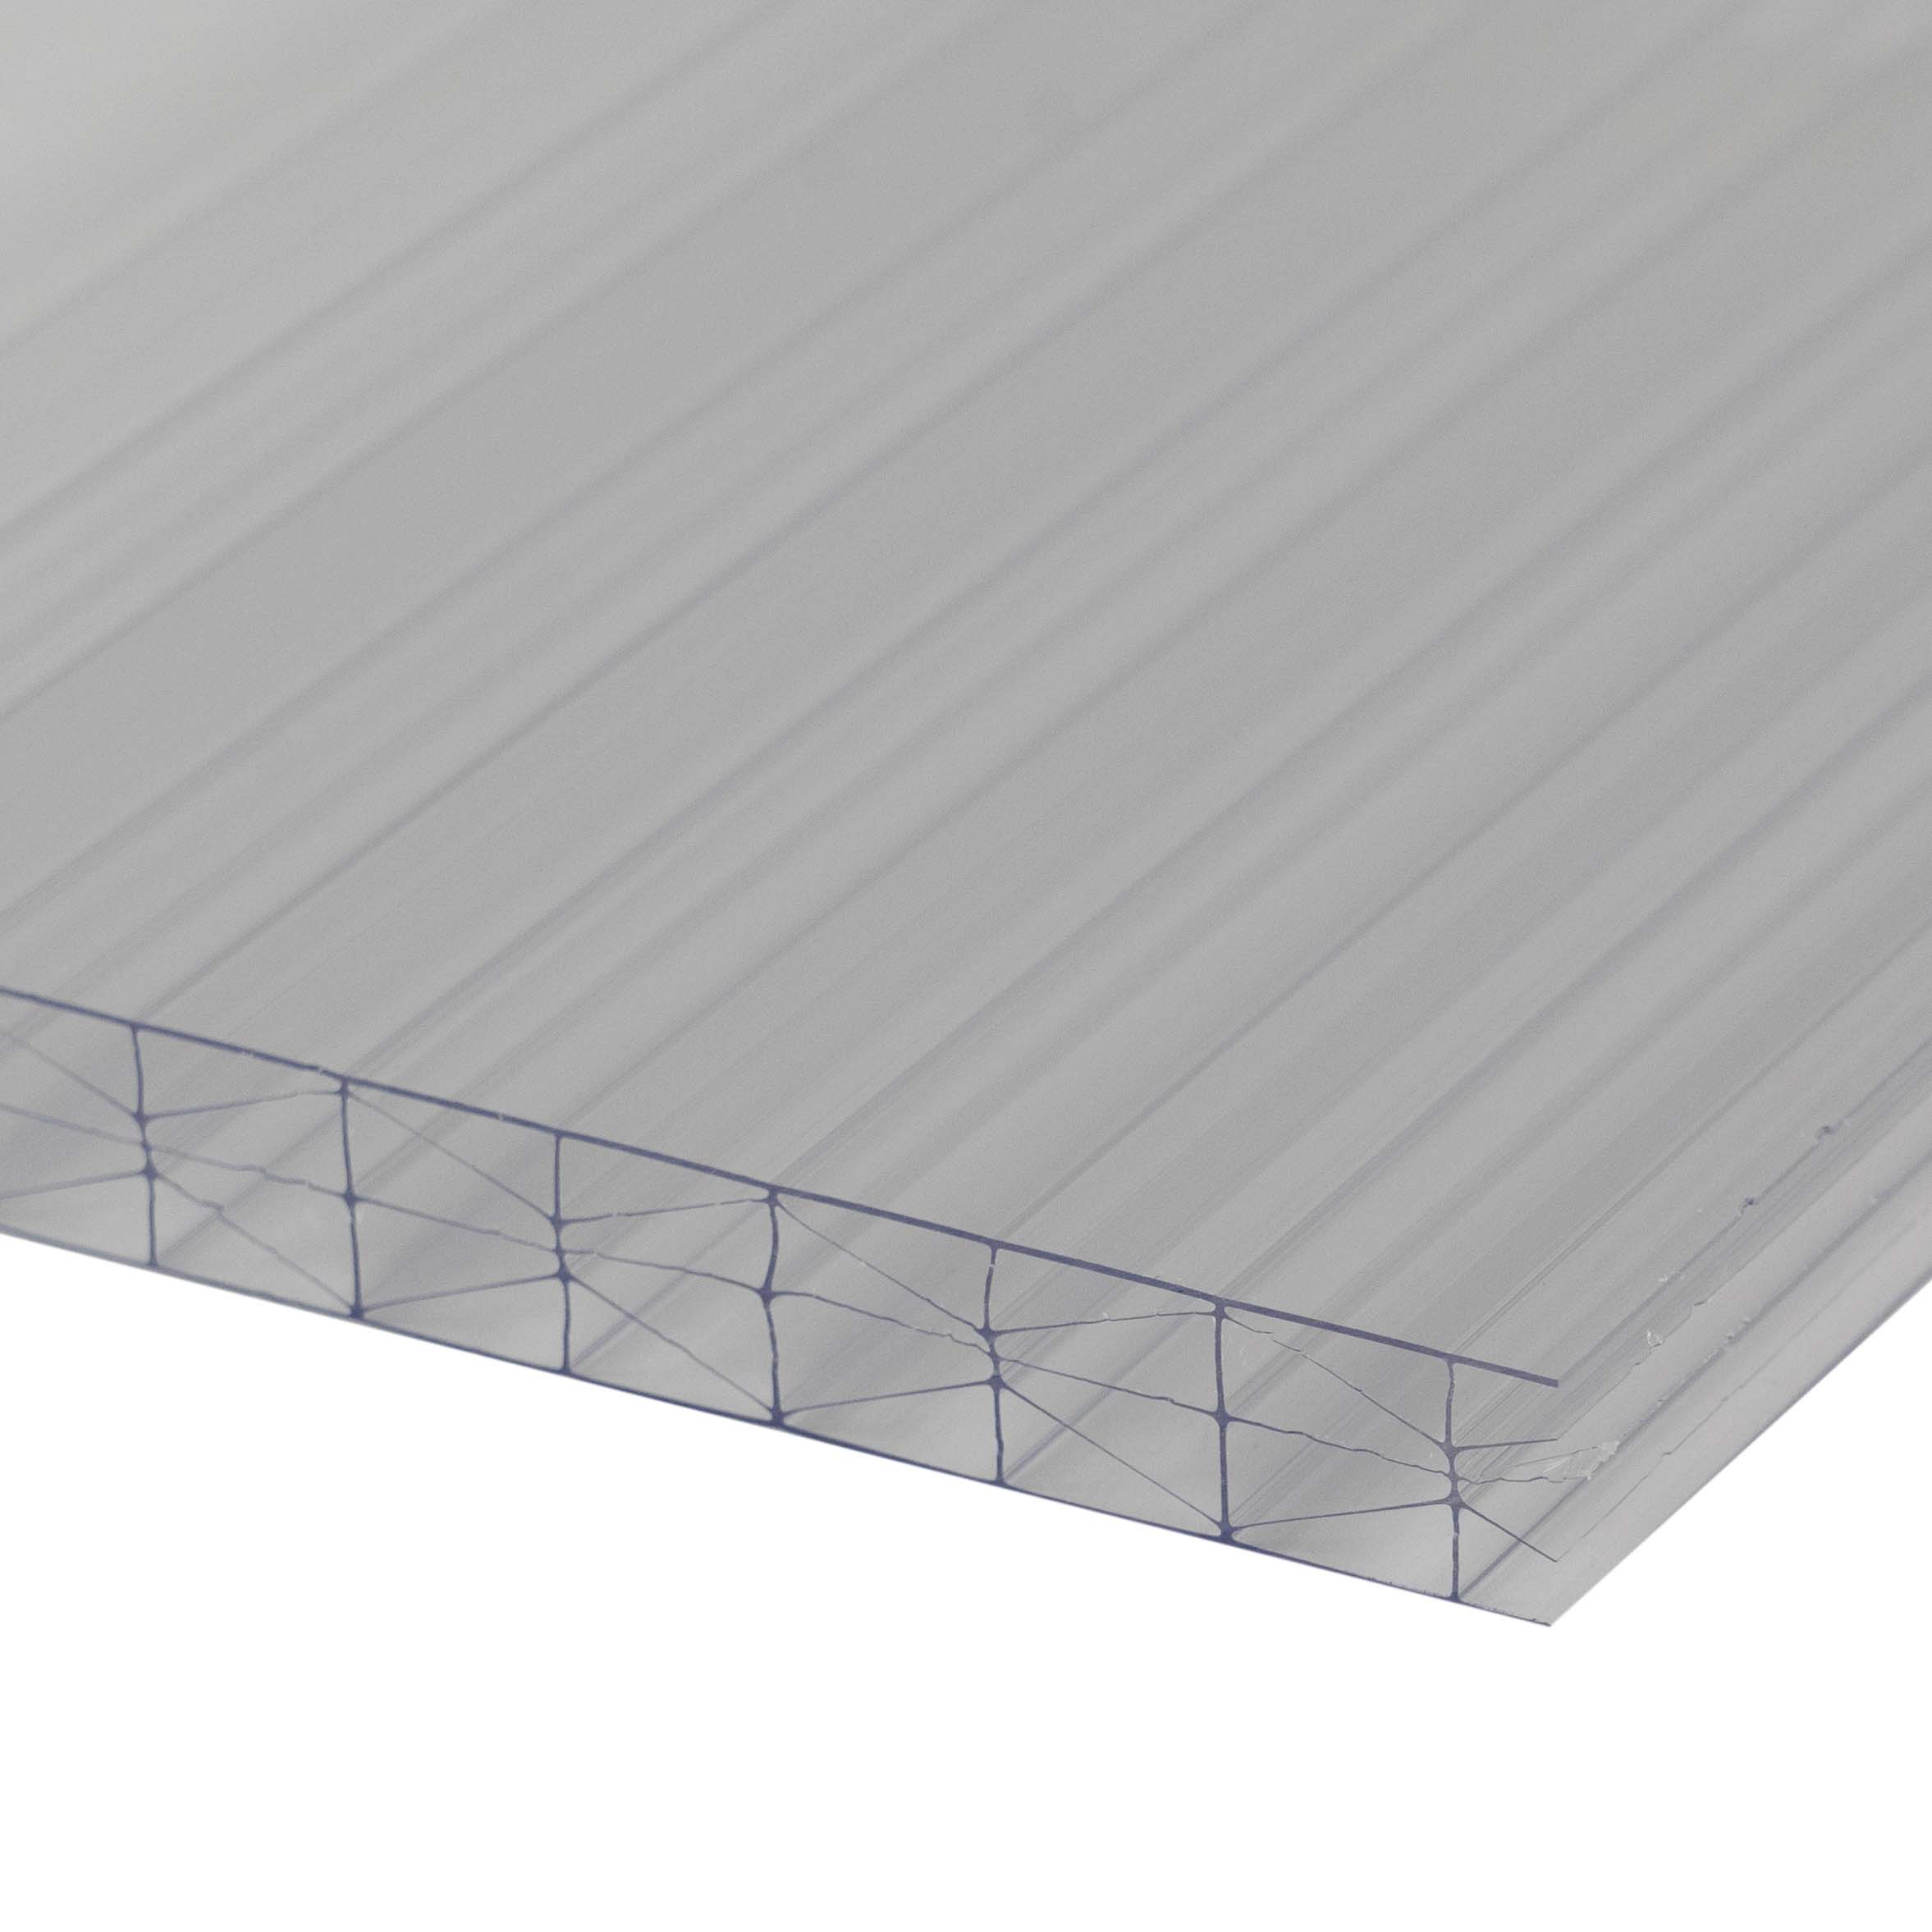 Doppelstegplatte 16 mm Farblos / Klar - Polycarbonat Hohlkammerplatten X Struktur Hagelfest